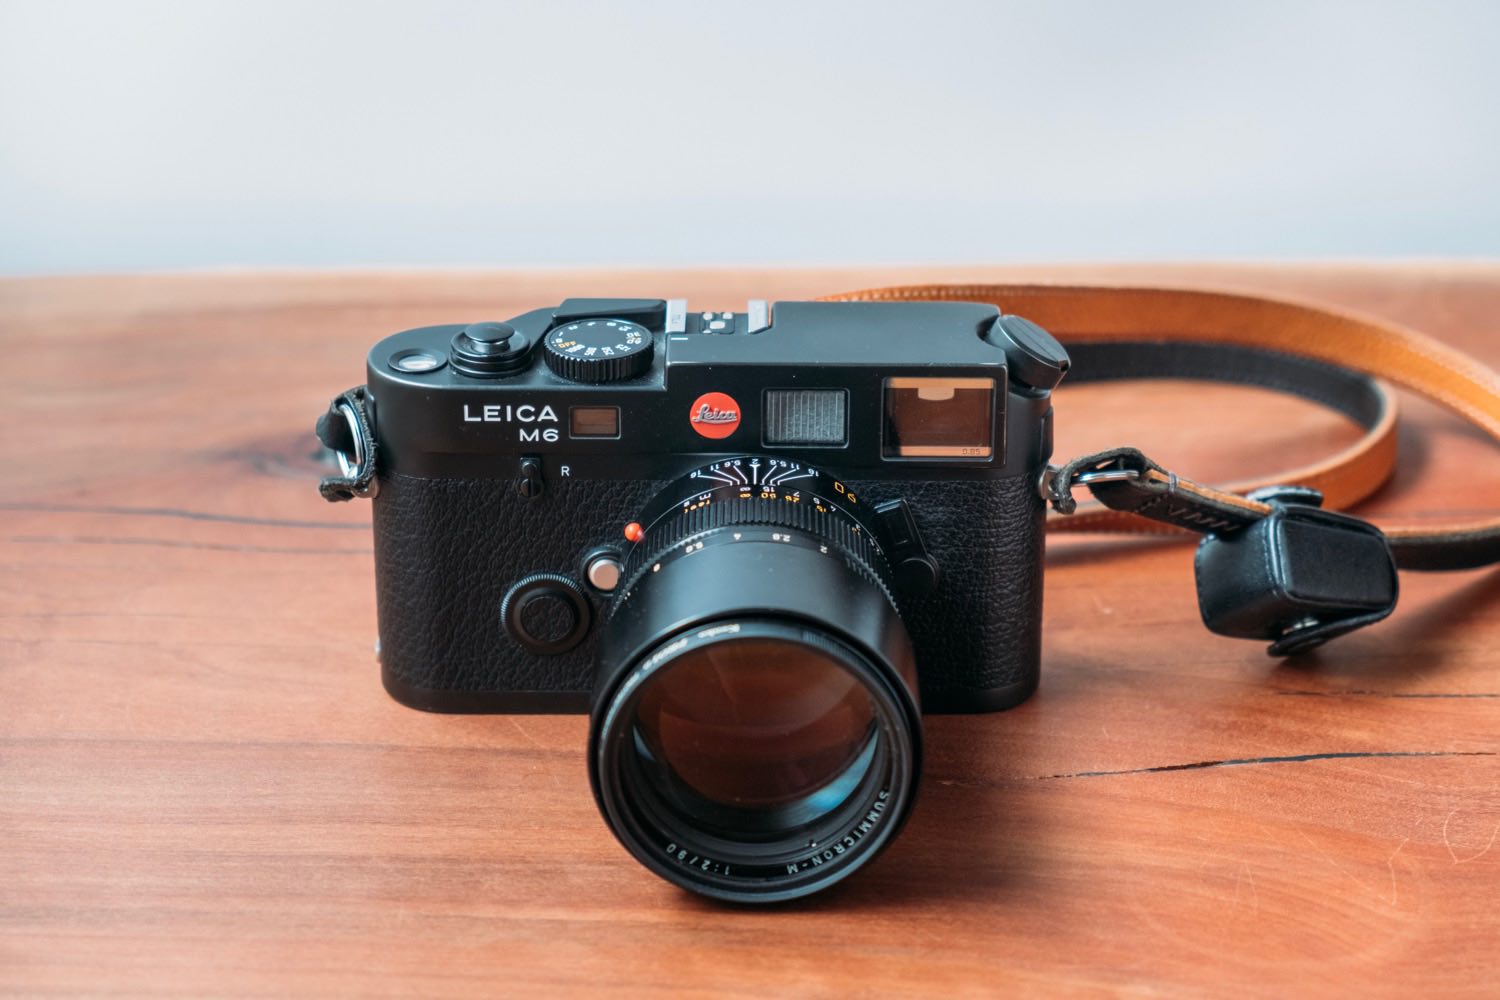 90mm最終モデル！Leica Summicron 90mm F2 3rd